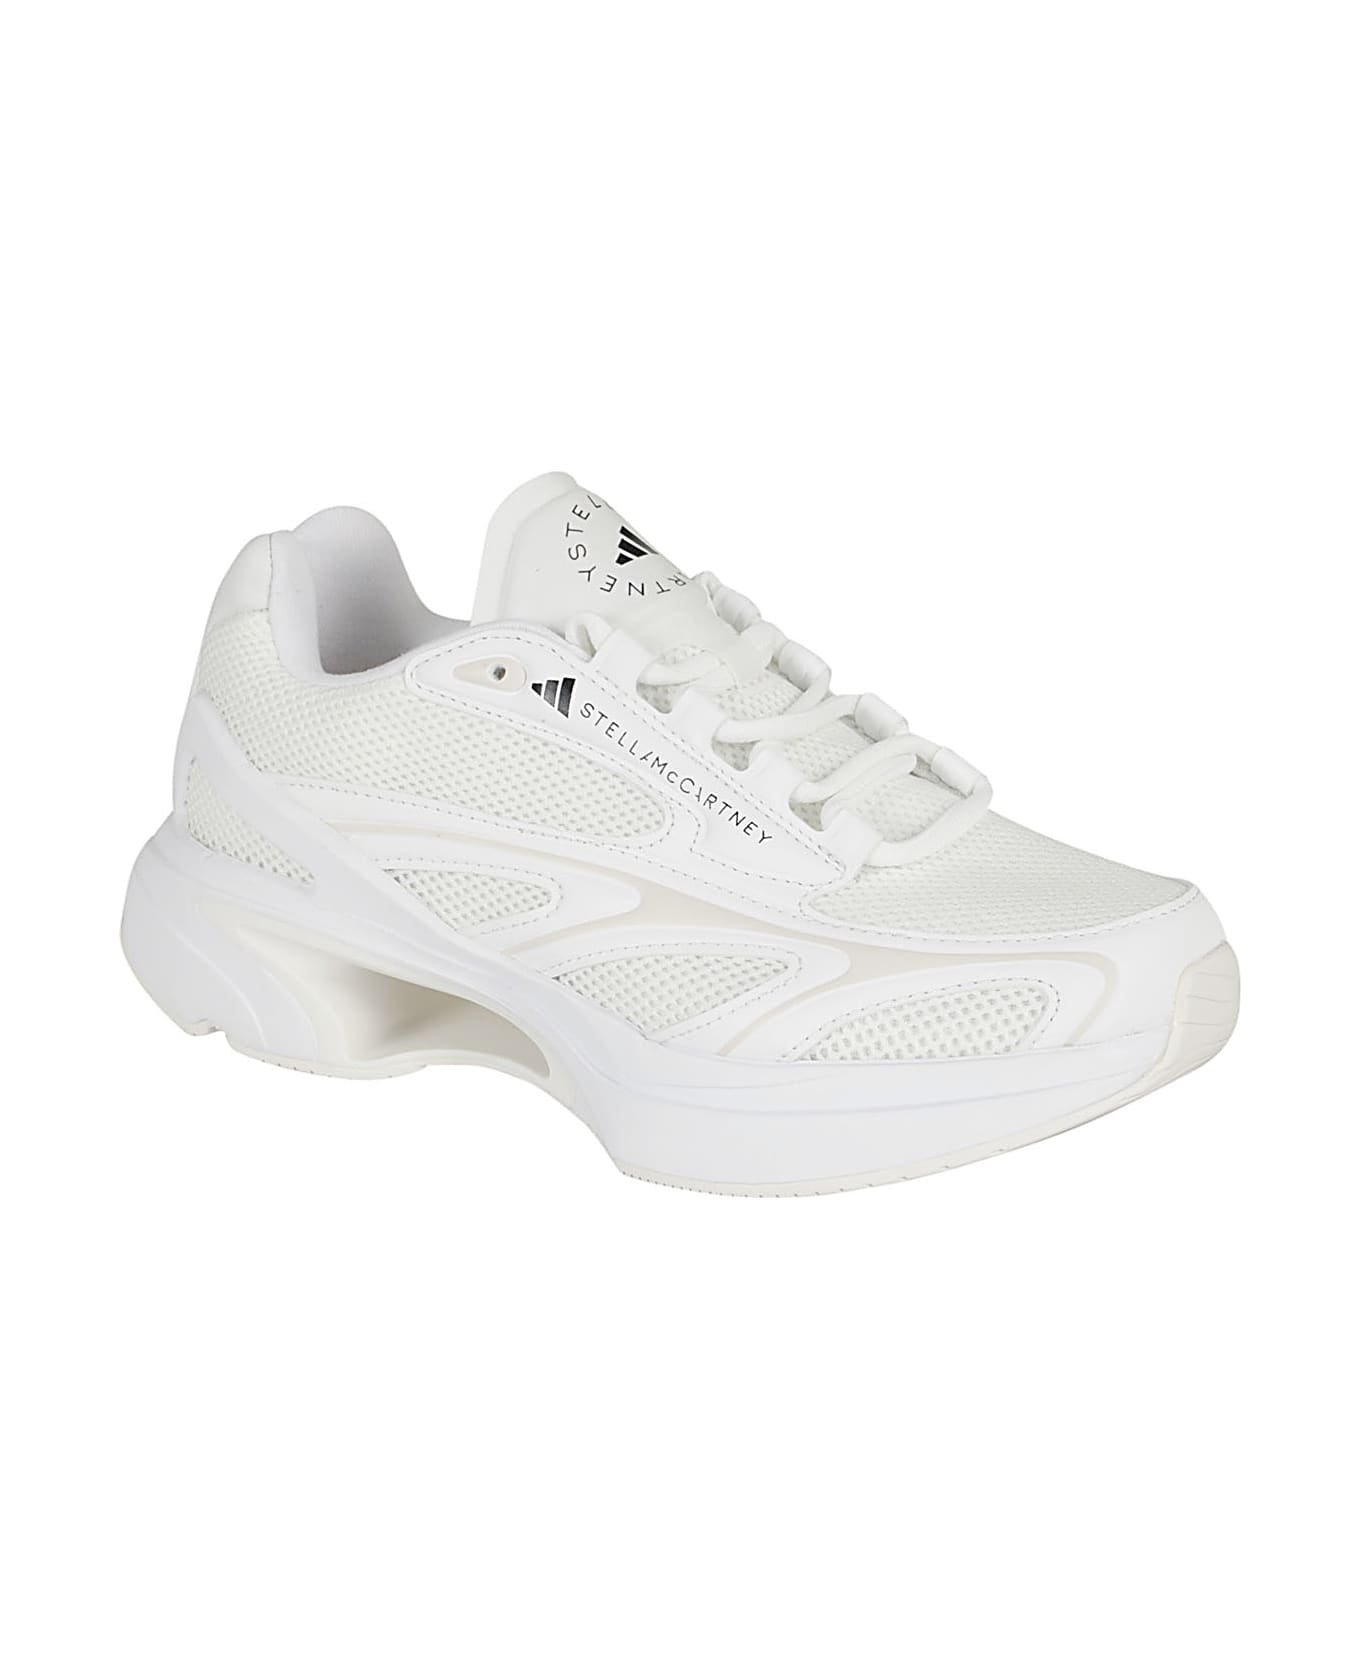 Adidas by Stella McCartney Sportswear 2000 Lace-up Sneakers - White